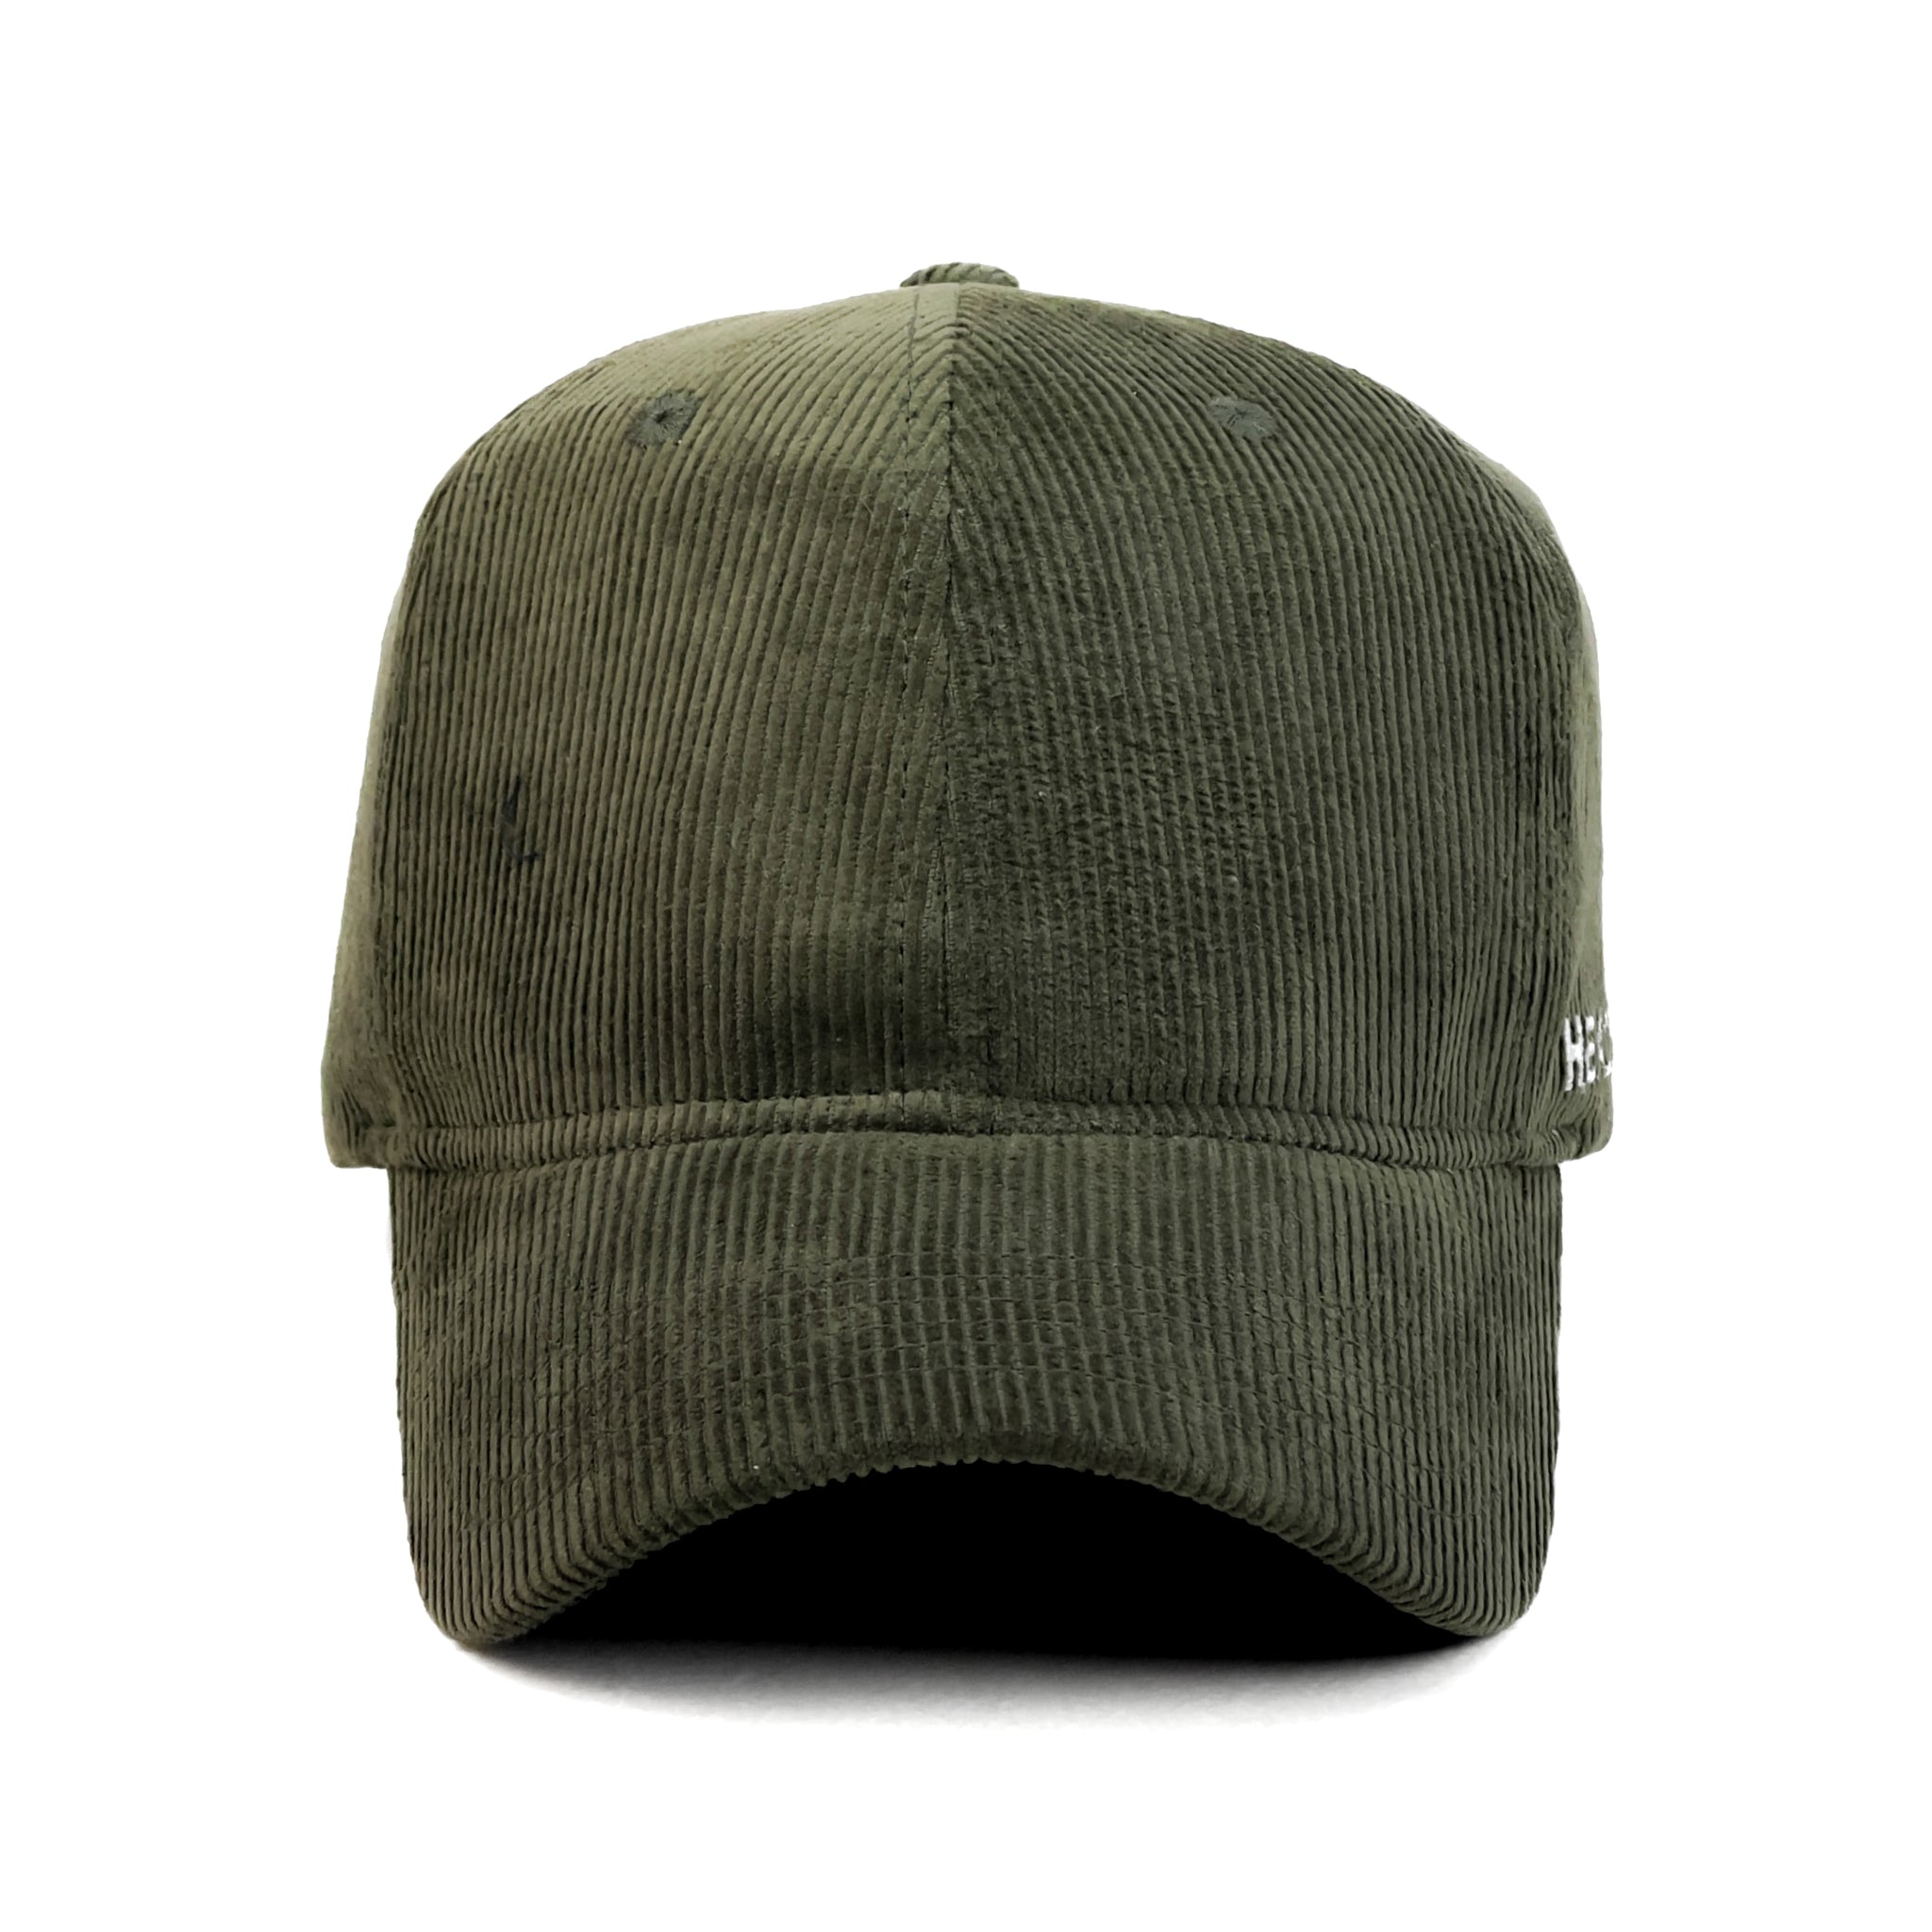 HEAD GEAR OLIVE CORDUROY CAP